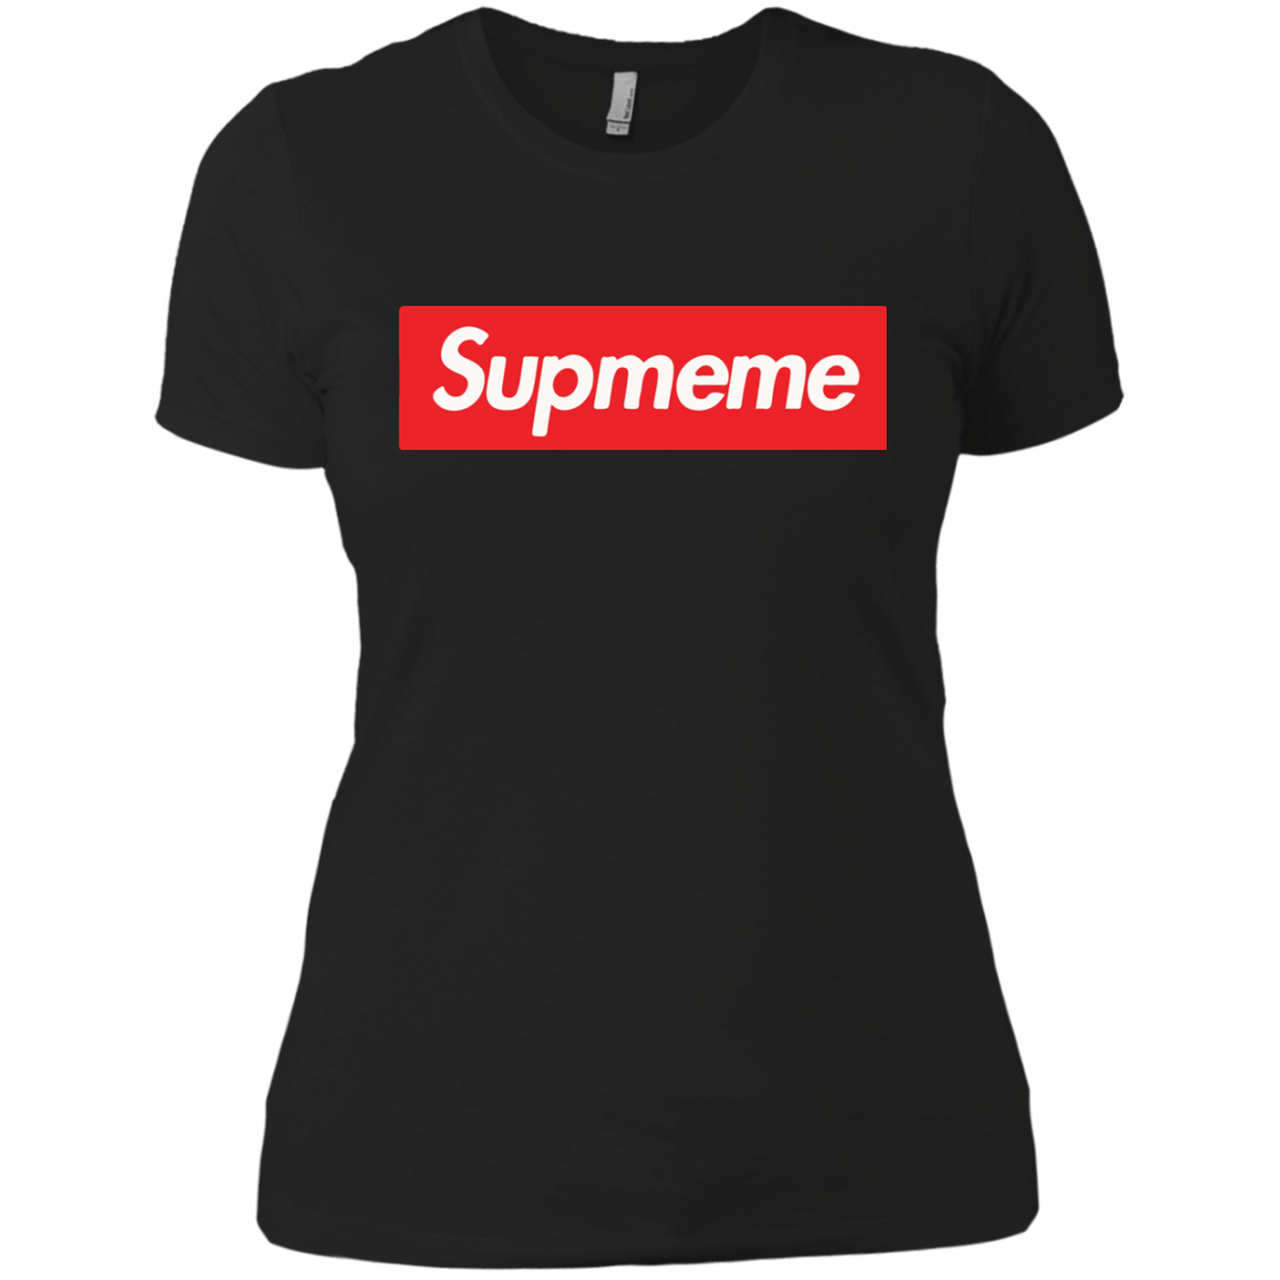 AGR Supmeme fake Supreme Box Logo funny t shirt Ladies.